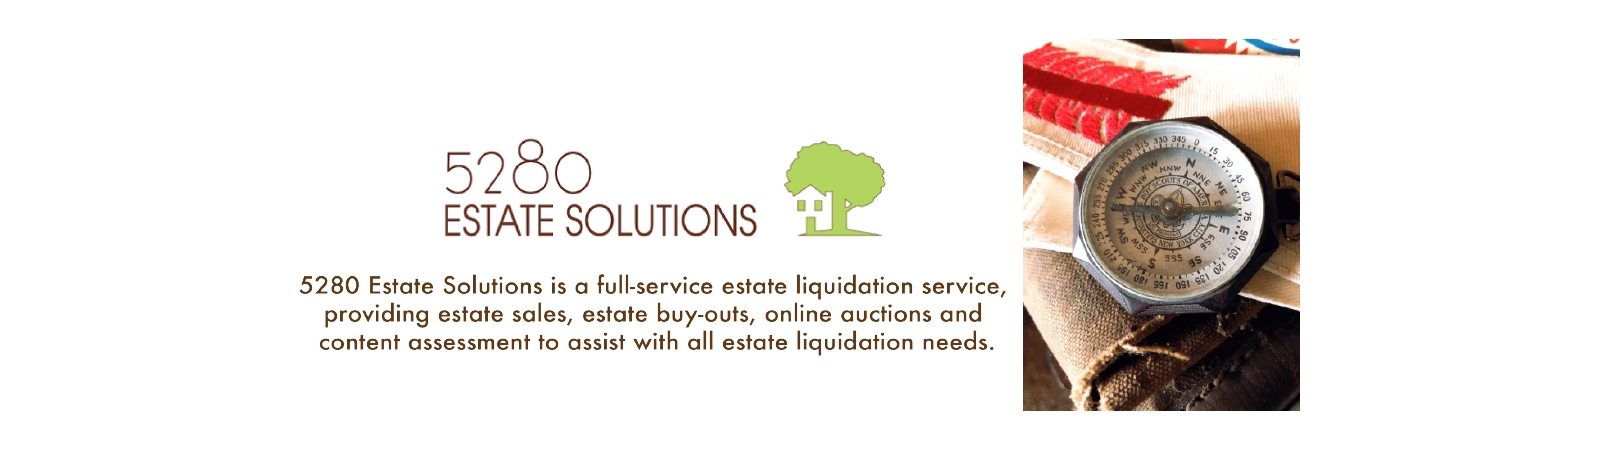 5280 Estate Solutions | AuctionNinja